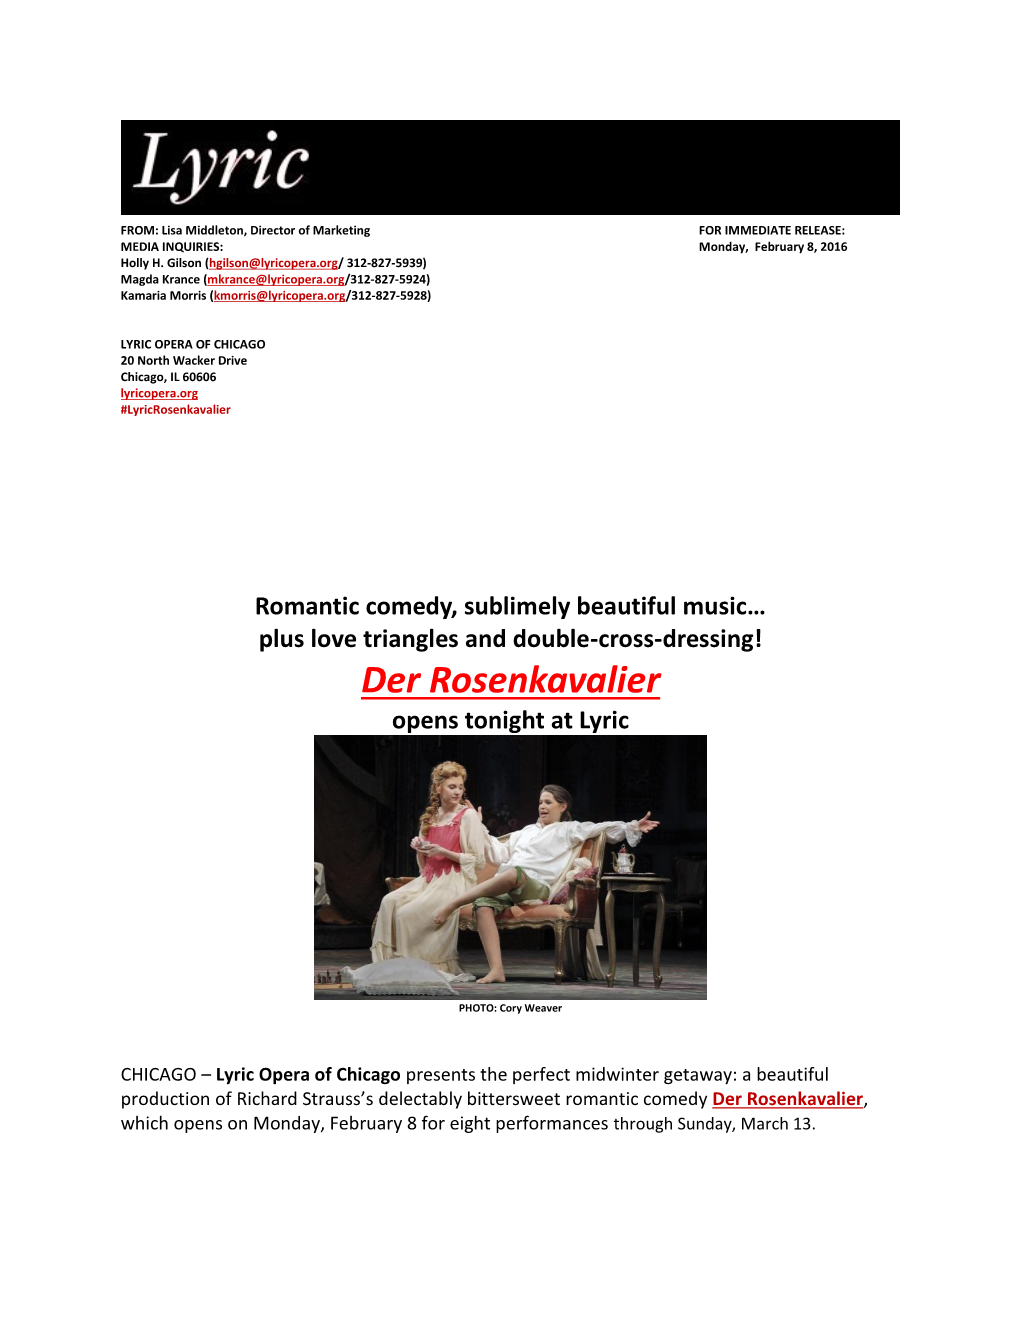 Der Rosenkavalier Opens Tonight at Lyric